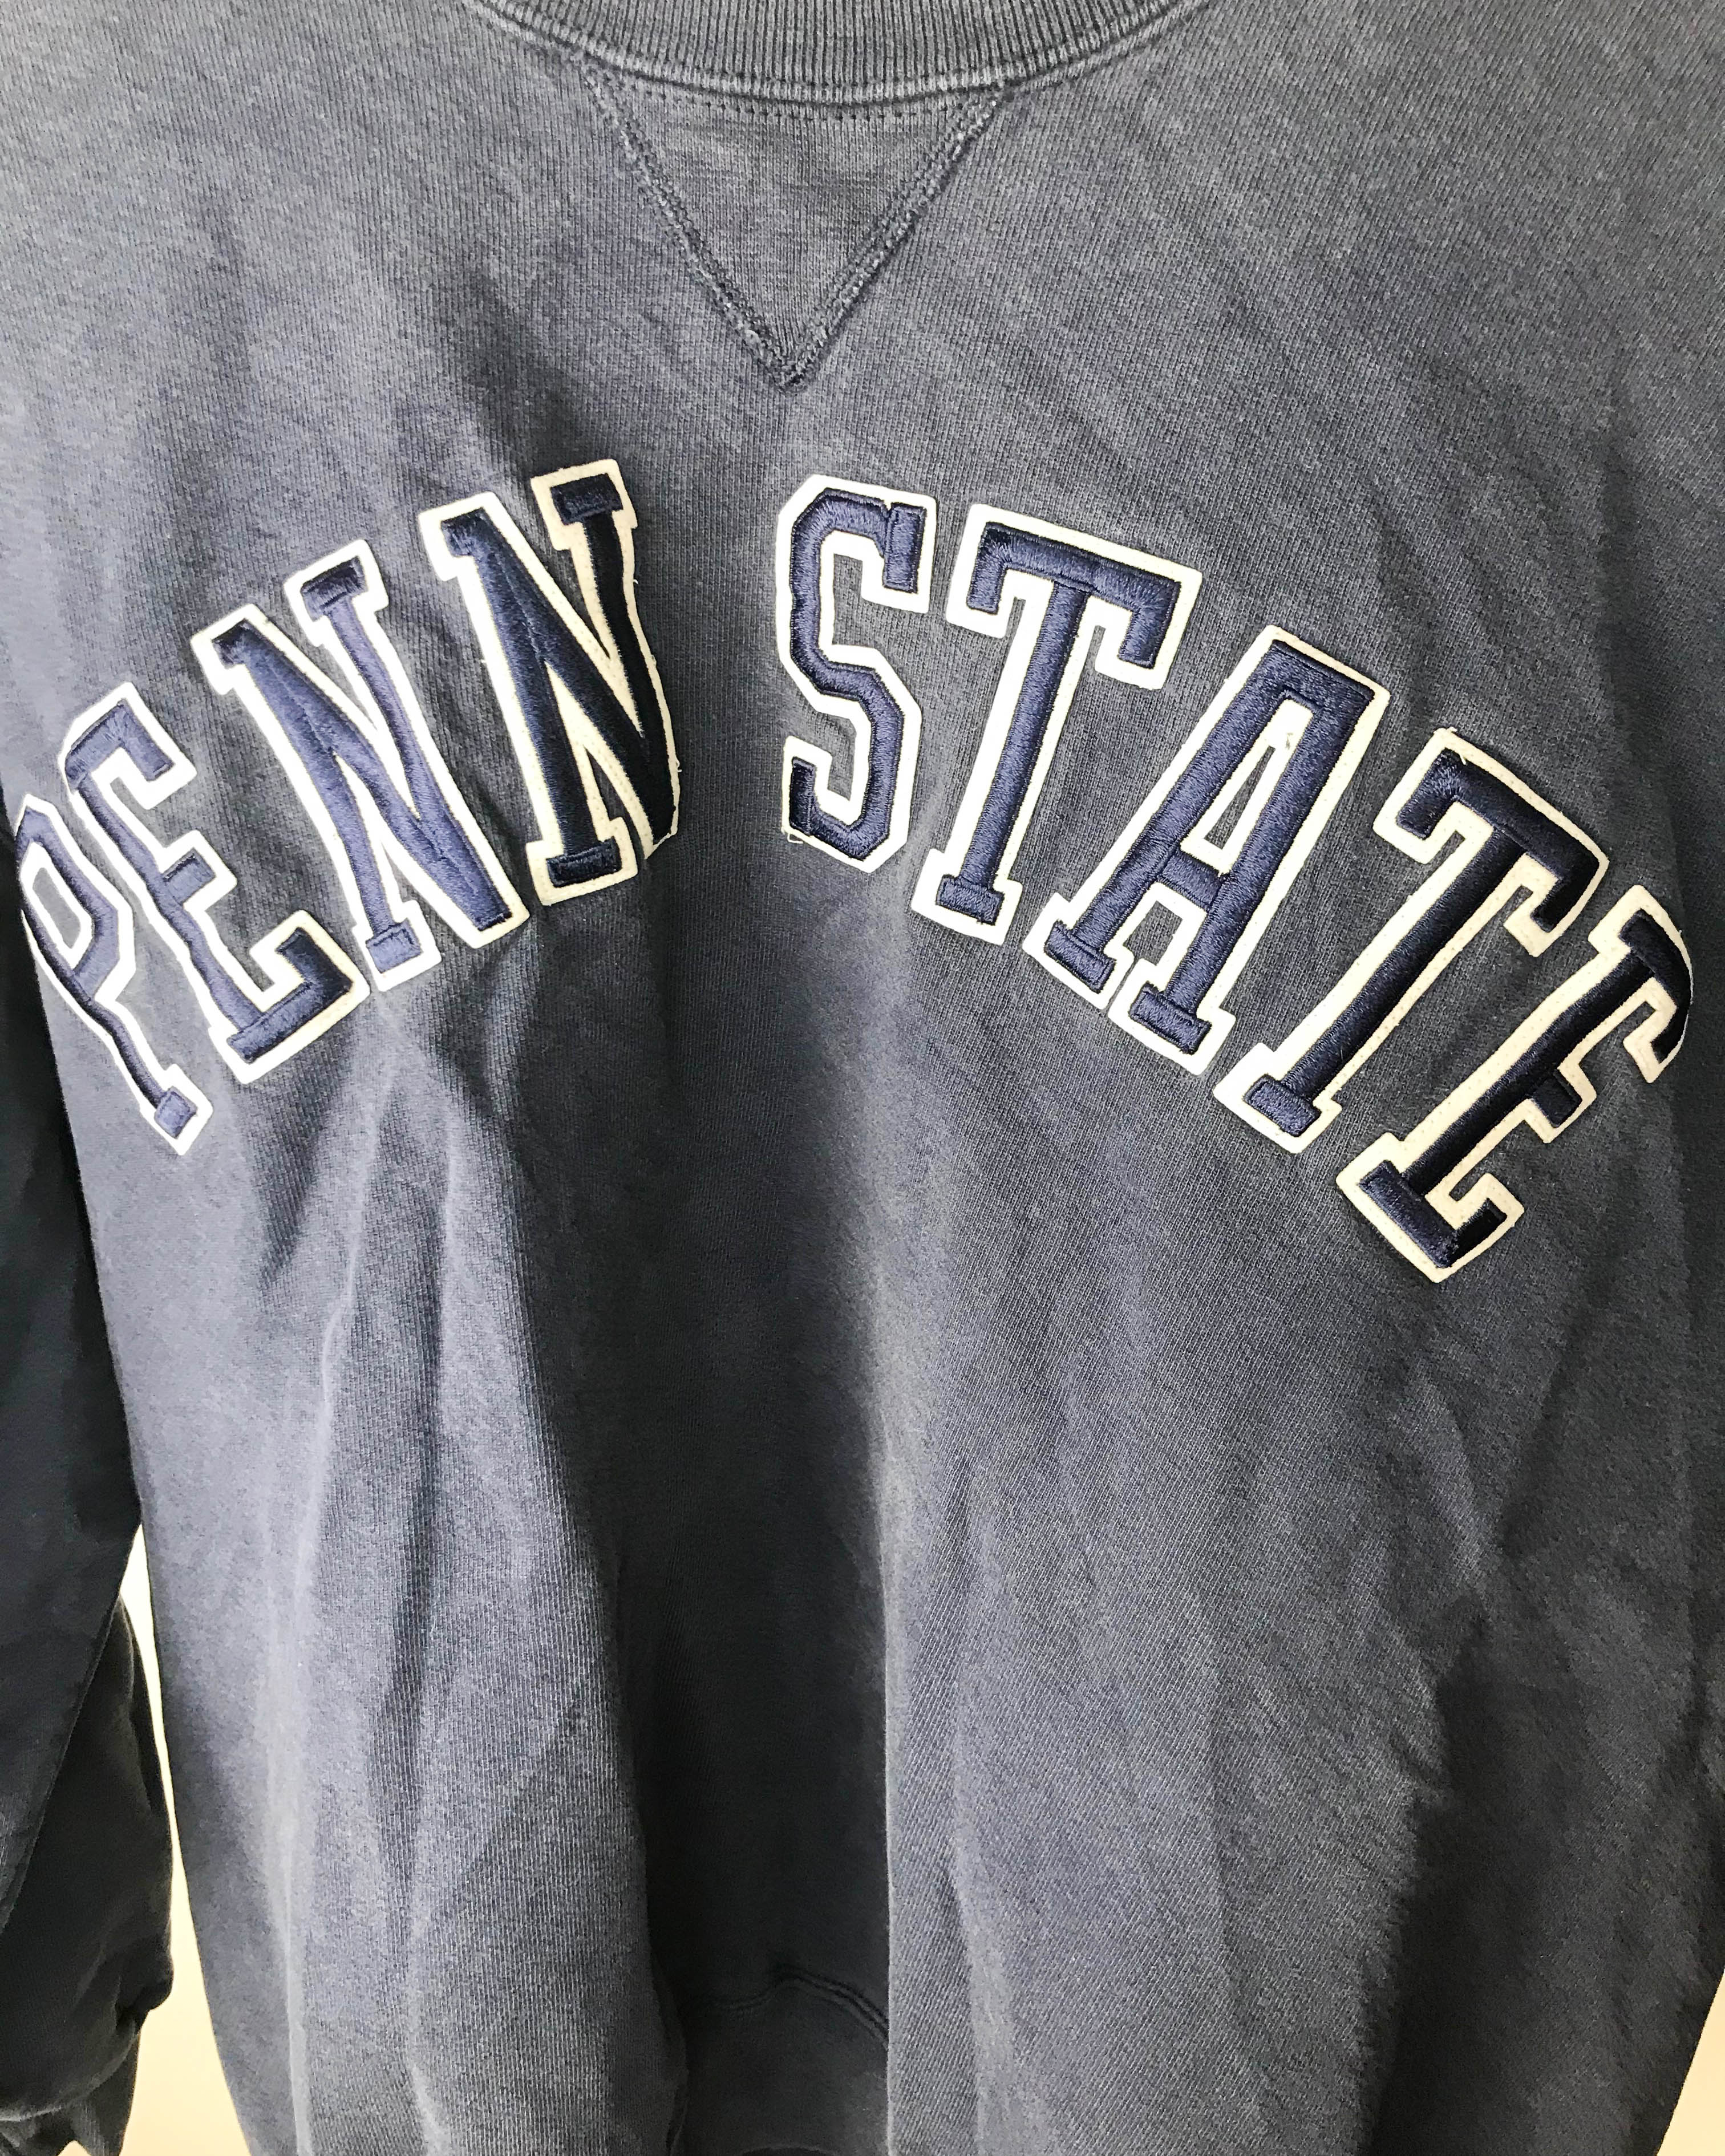 Pennsylvania State University Russell Athletic Sweatshirt